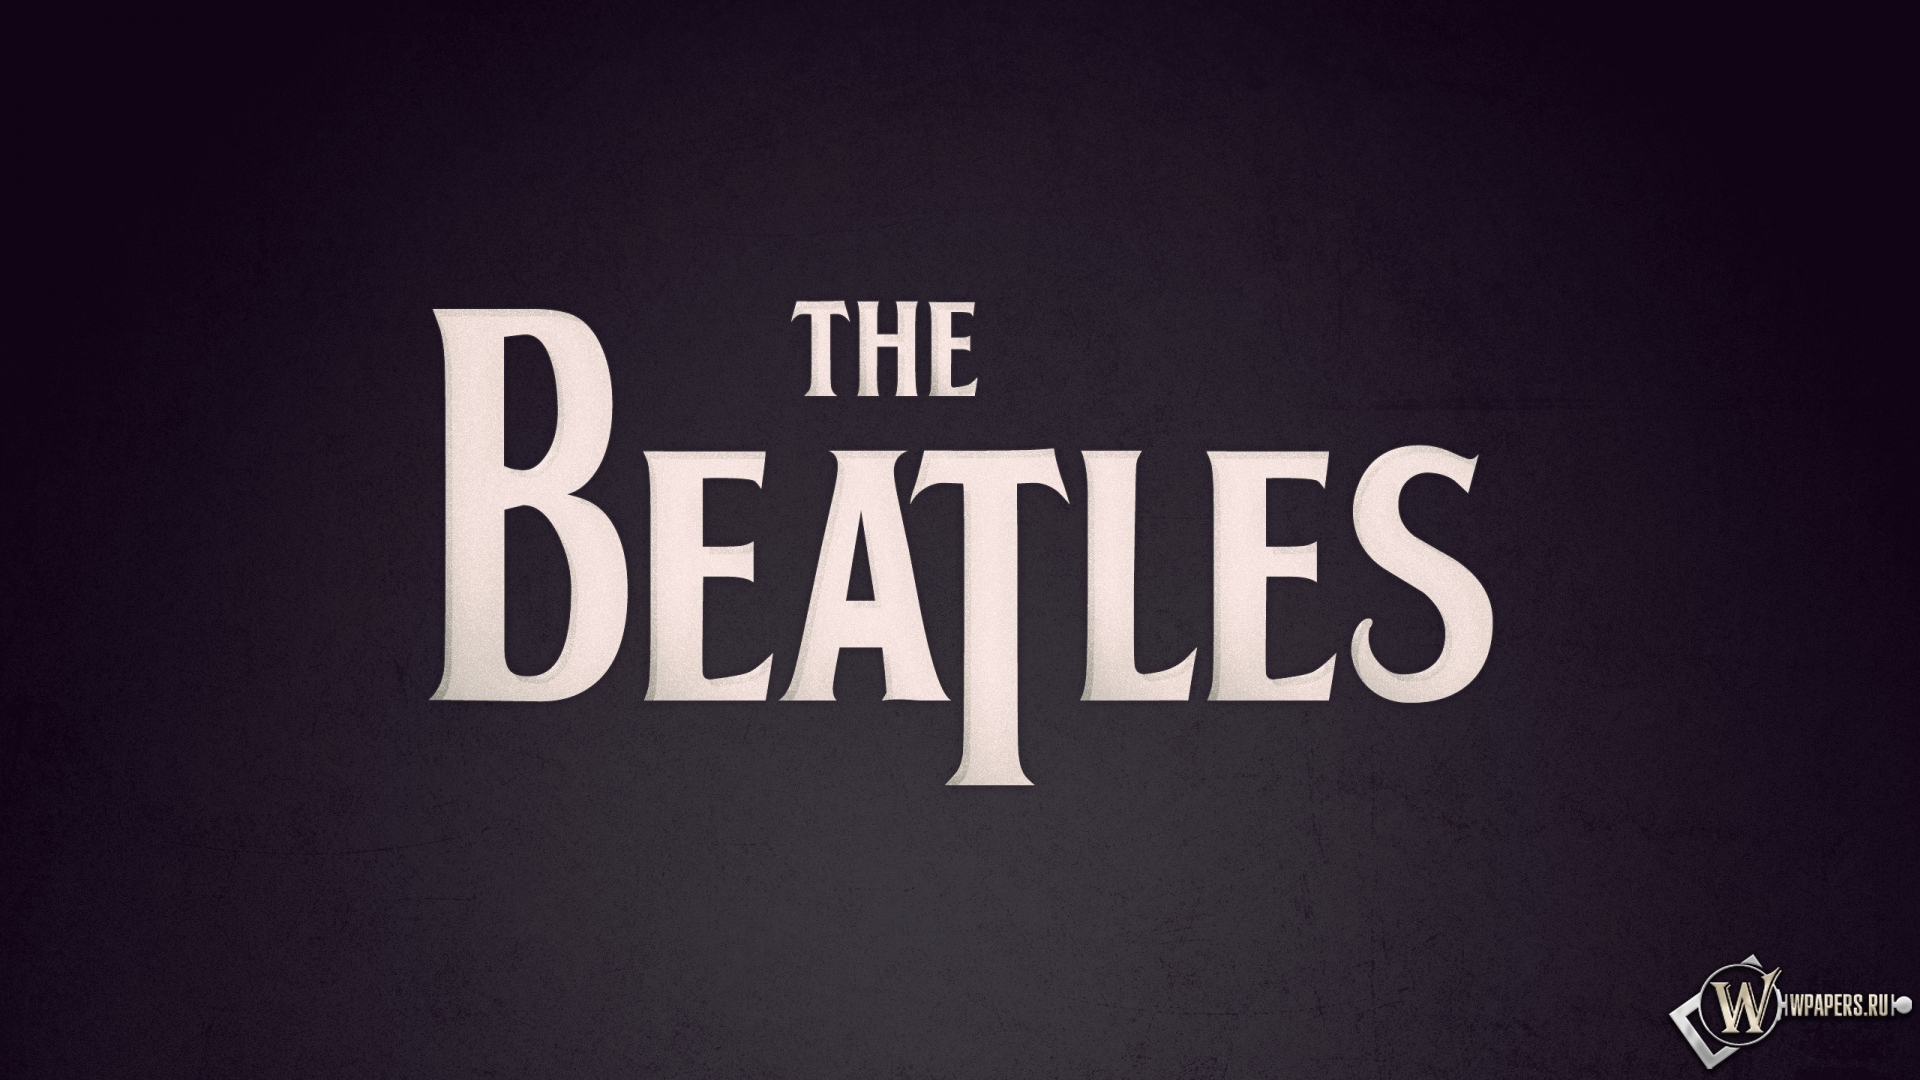 The Beatles 1920x1080